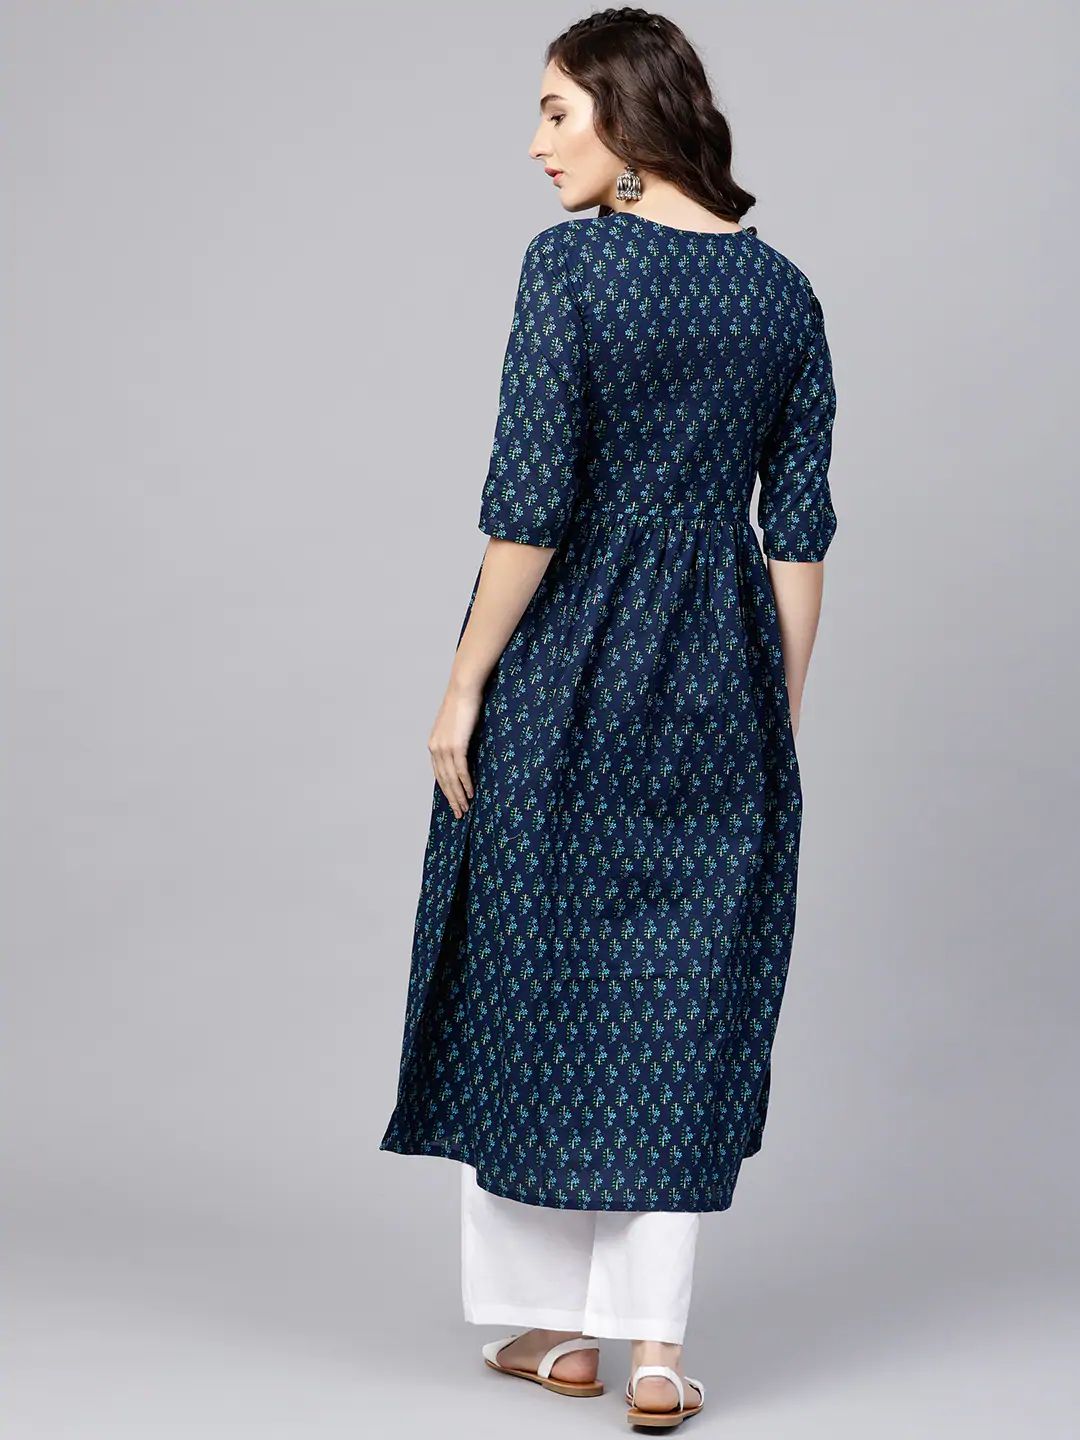 Women's Navy Blue Printed Cotton Party Wear/Casual Wear Kurta Set/Suit (2Pieces) - Vamika